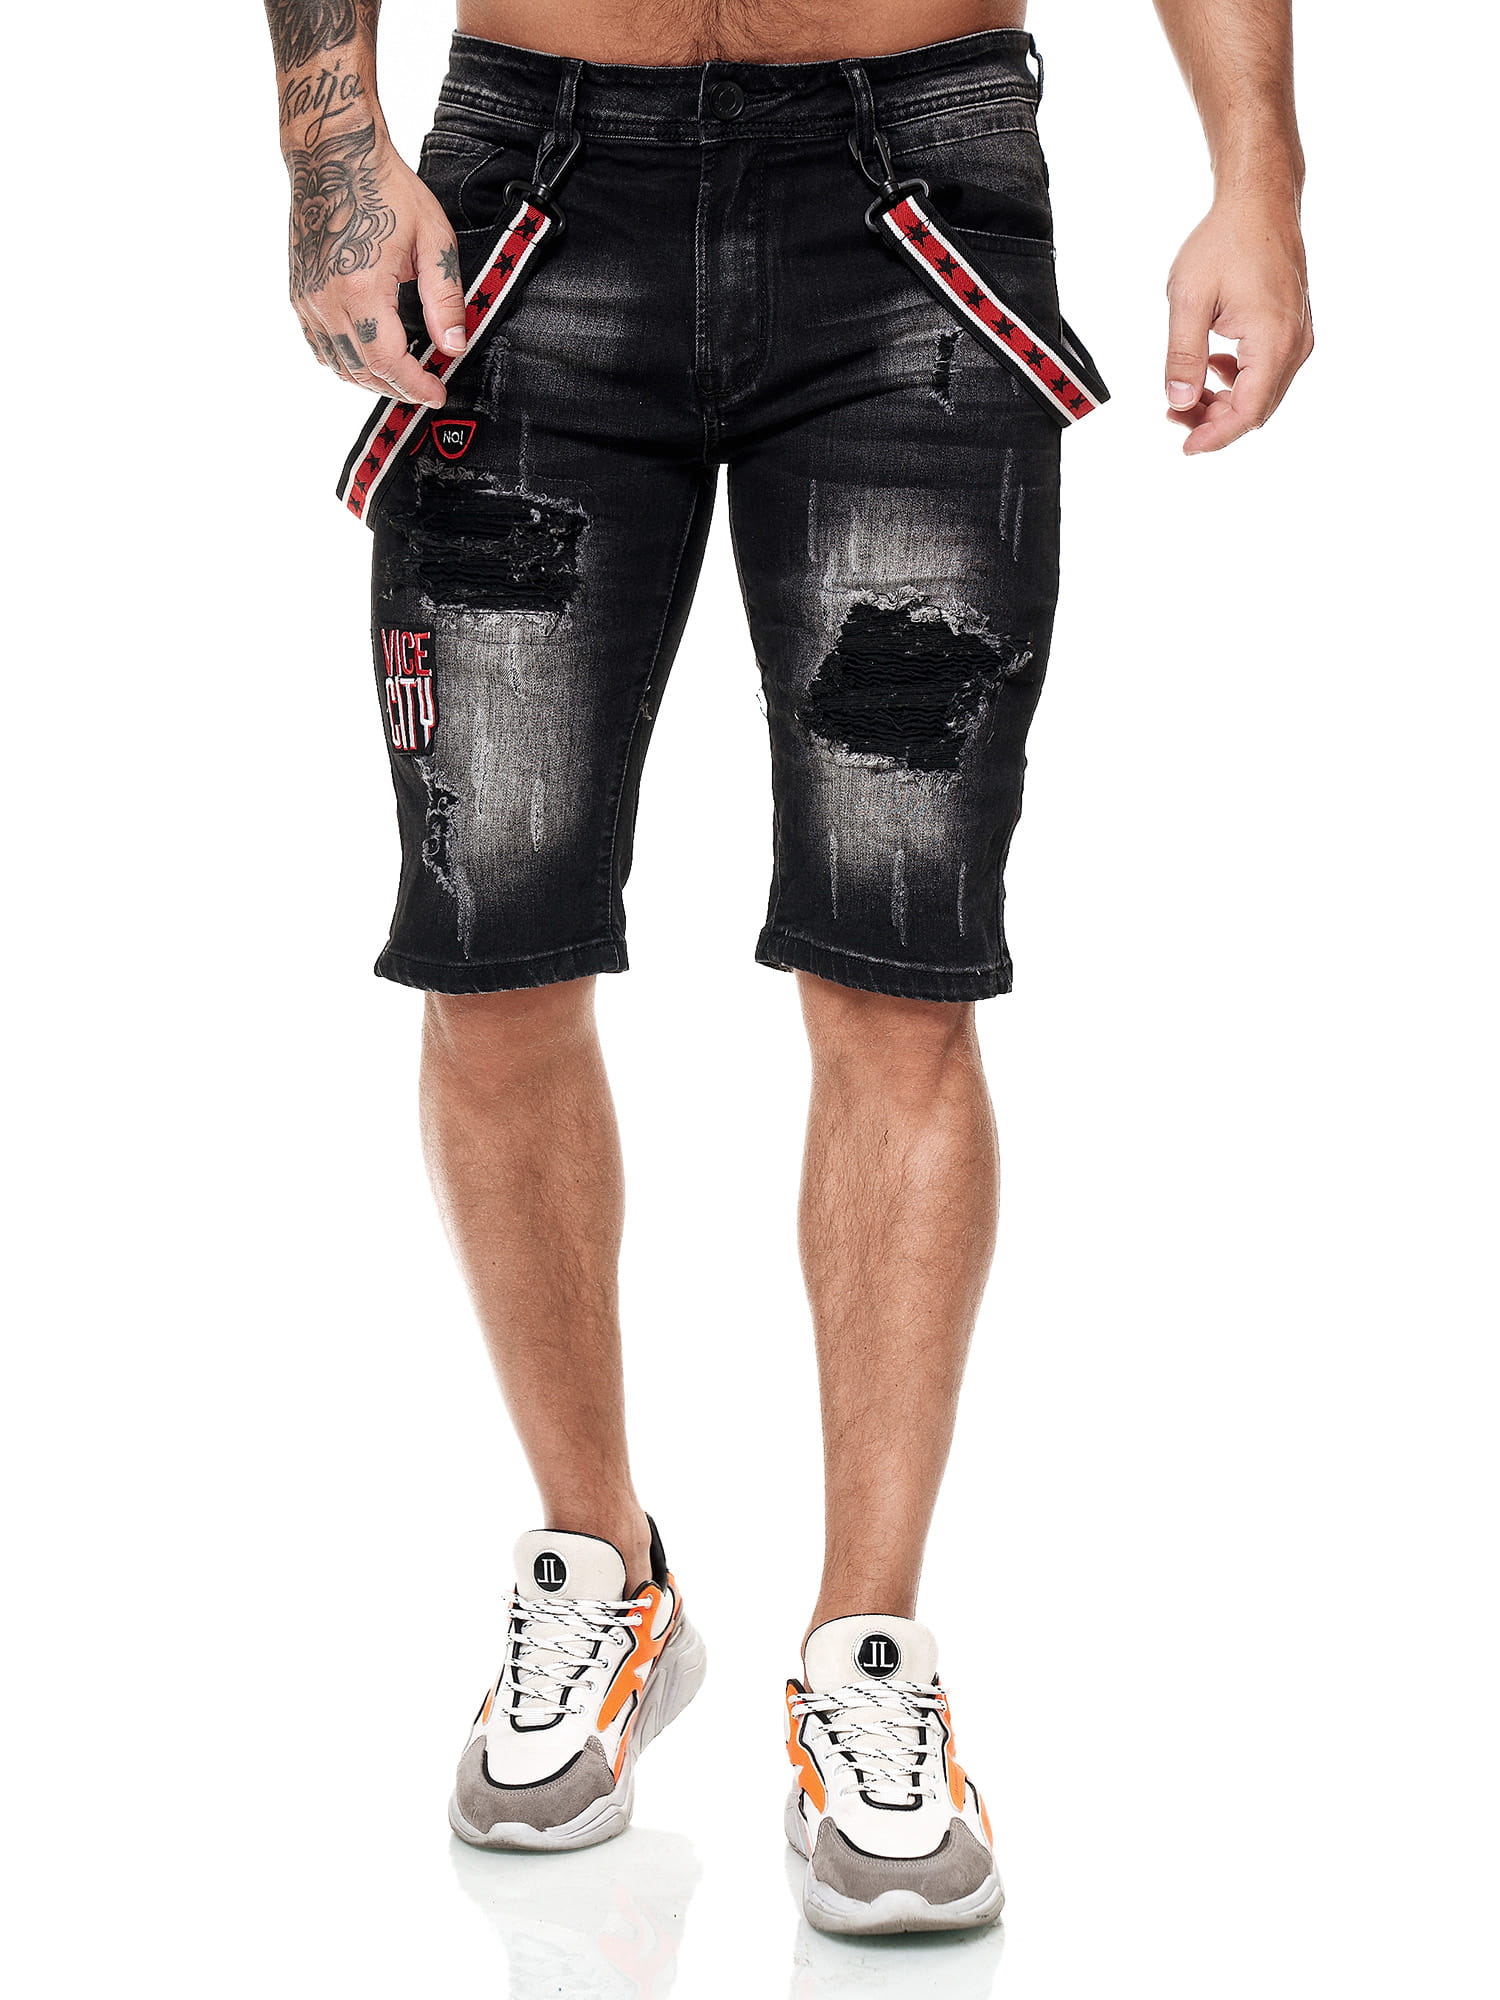 Herren Shorts Bermuda Jeansshorts Destroyed Wash Clubwear Modell E7533